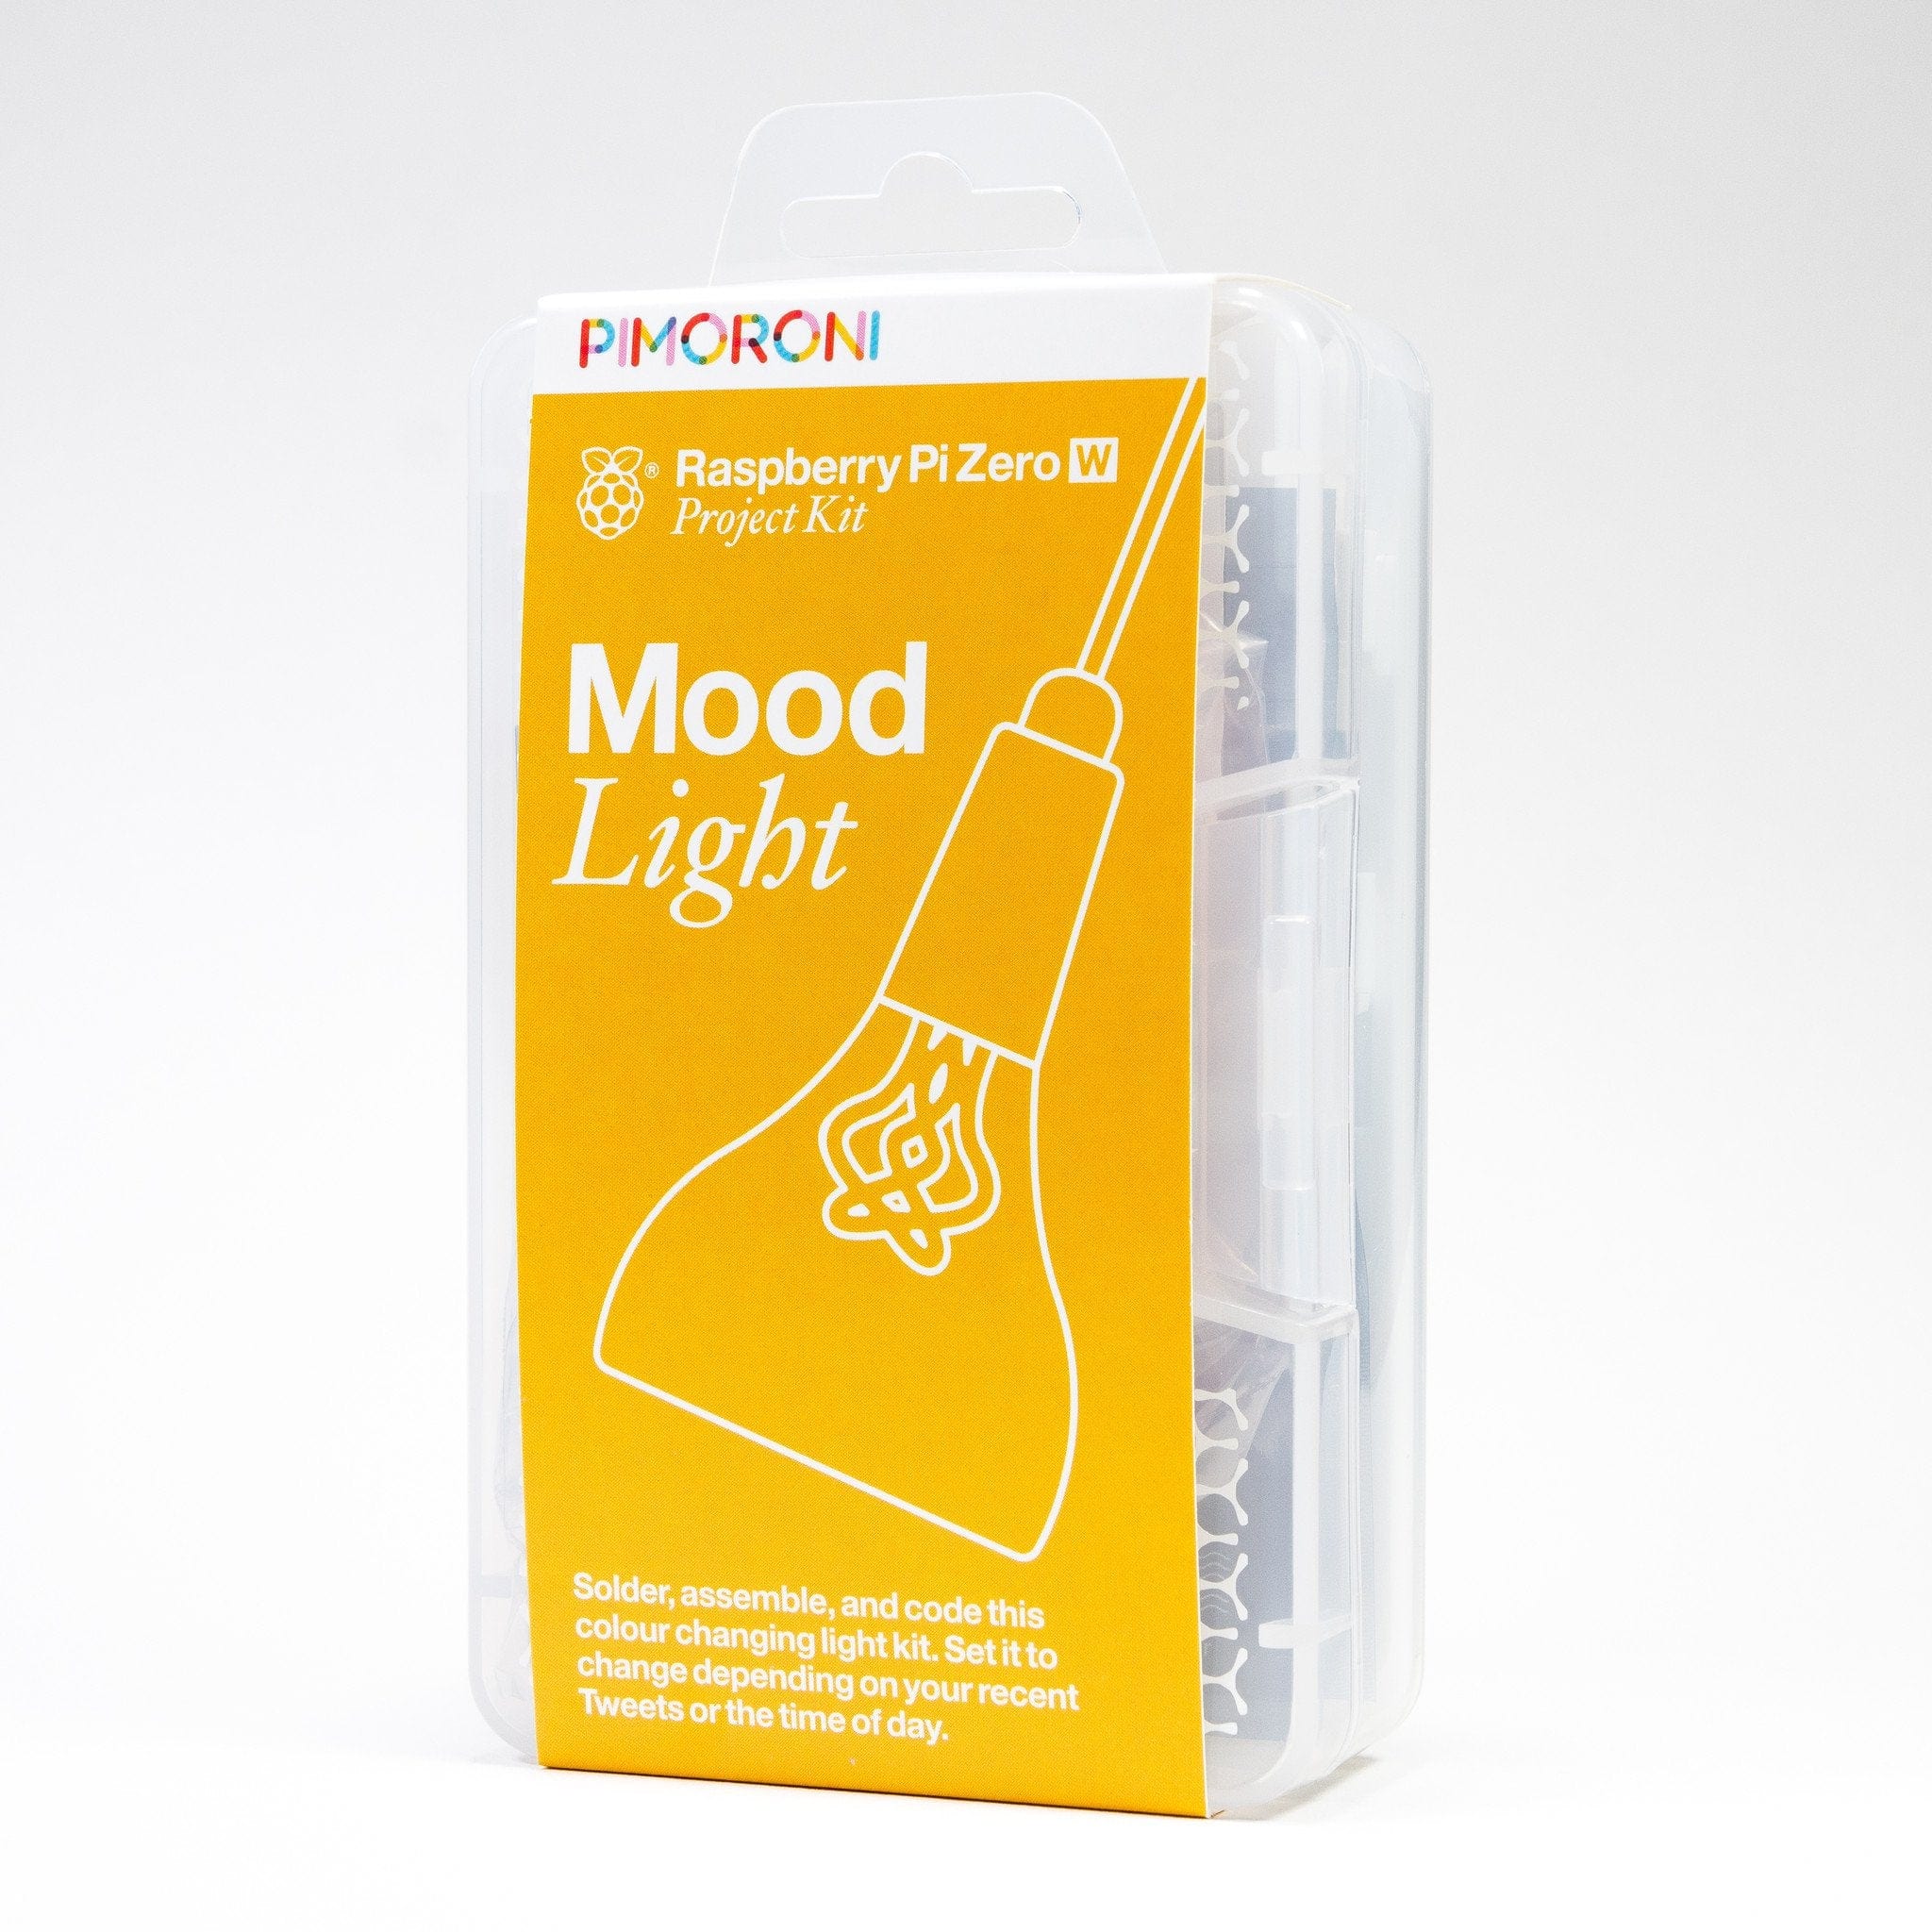 Mood Light - Pi Zero W Project Kit - The Pi Hut